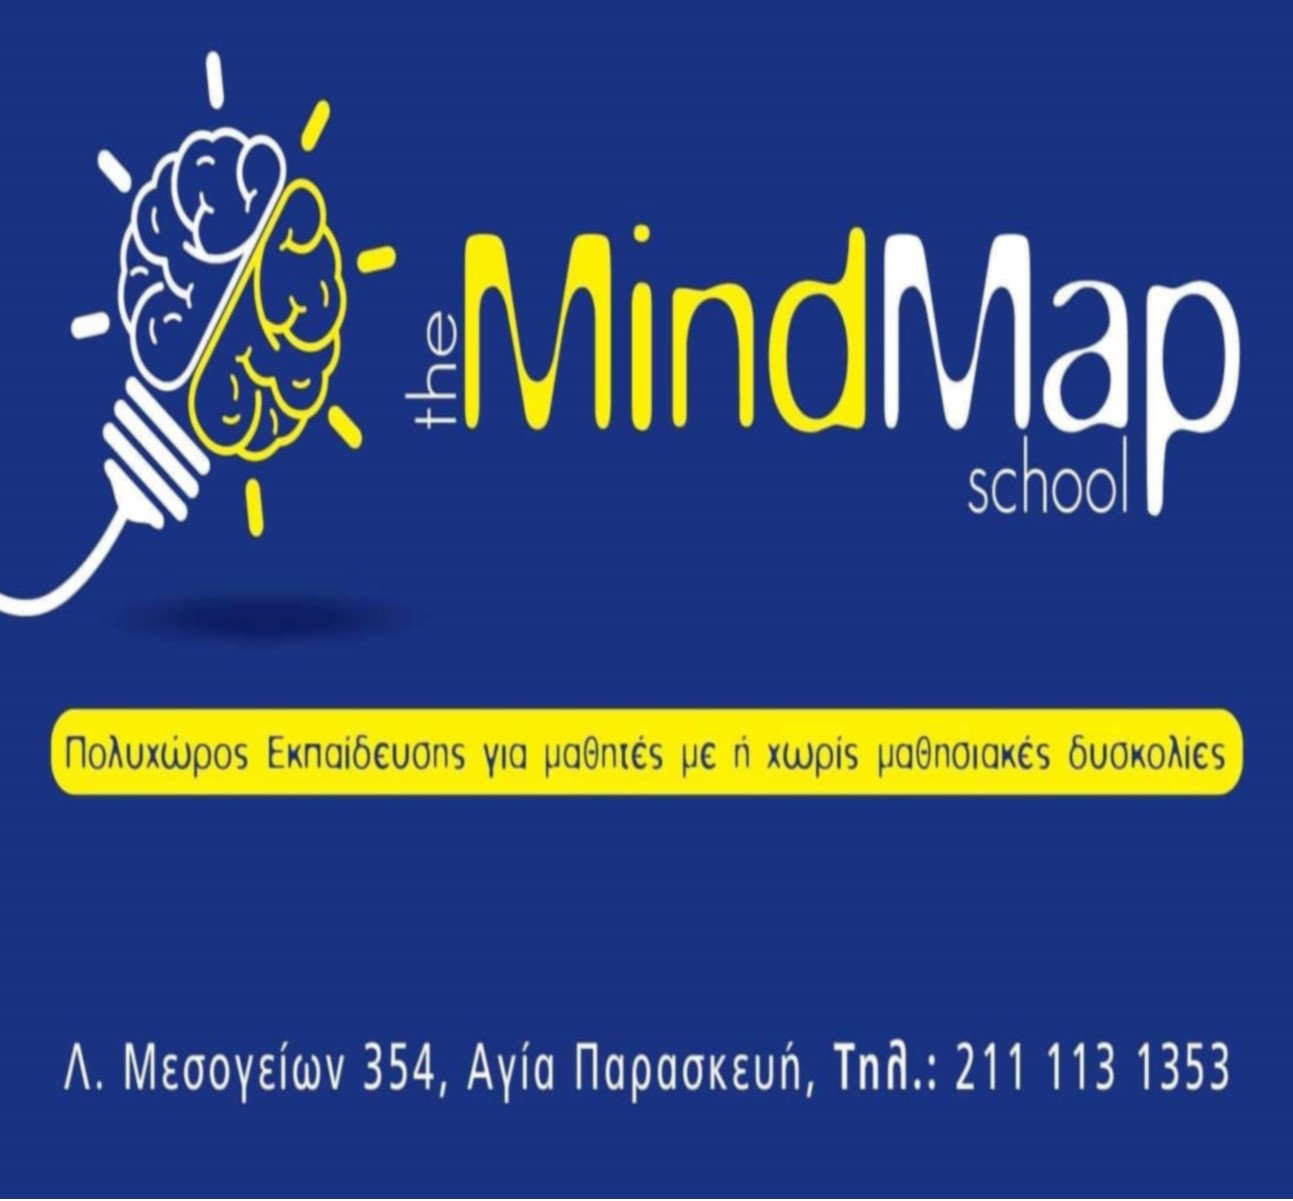 The MindMap School logo